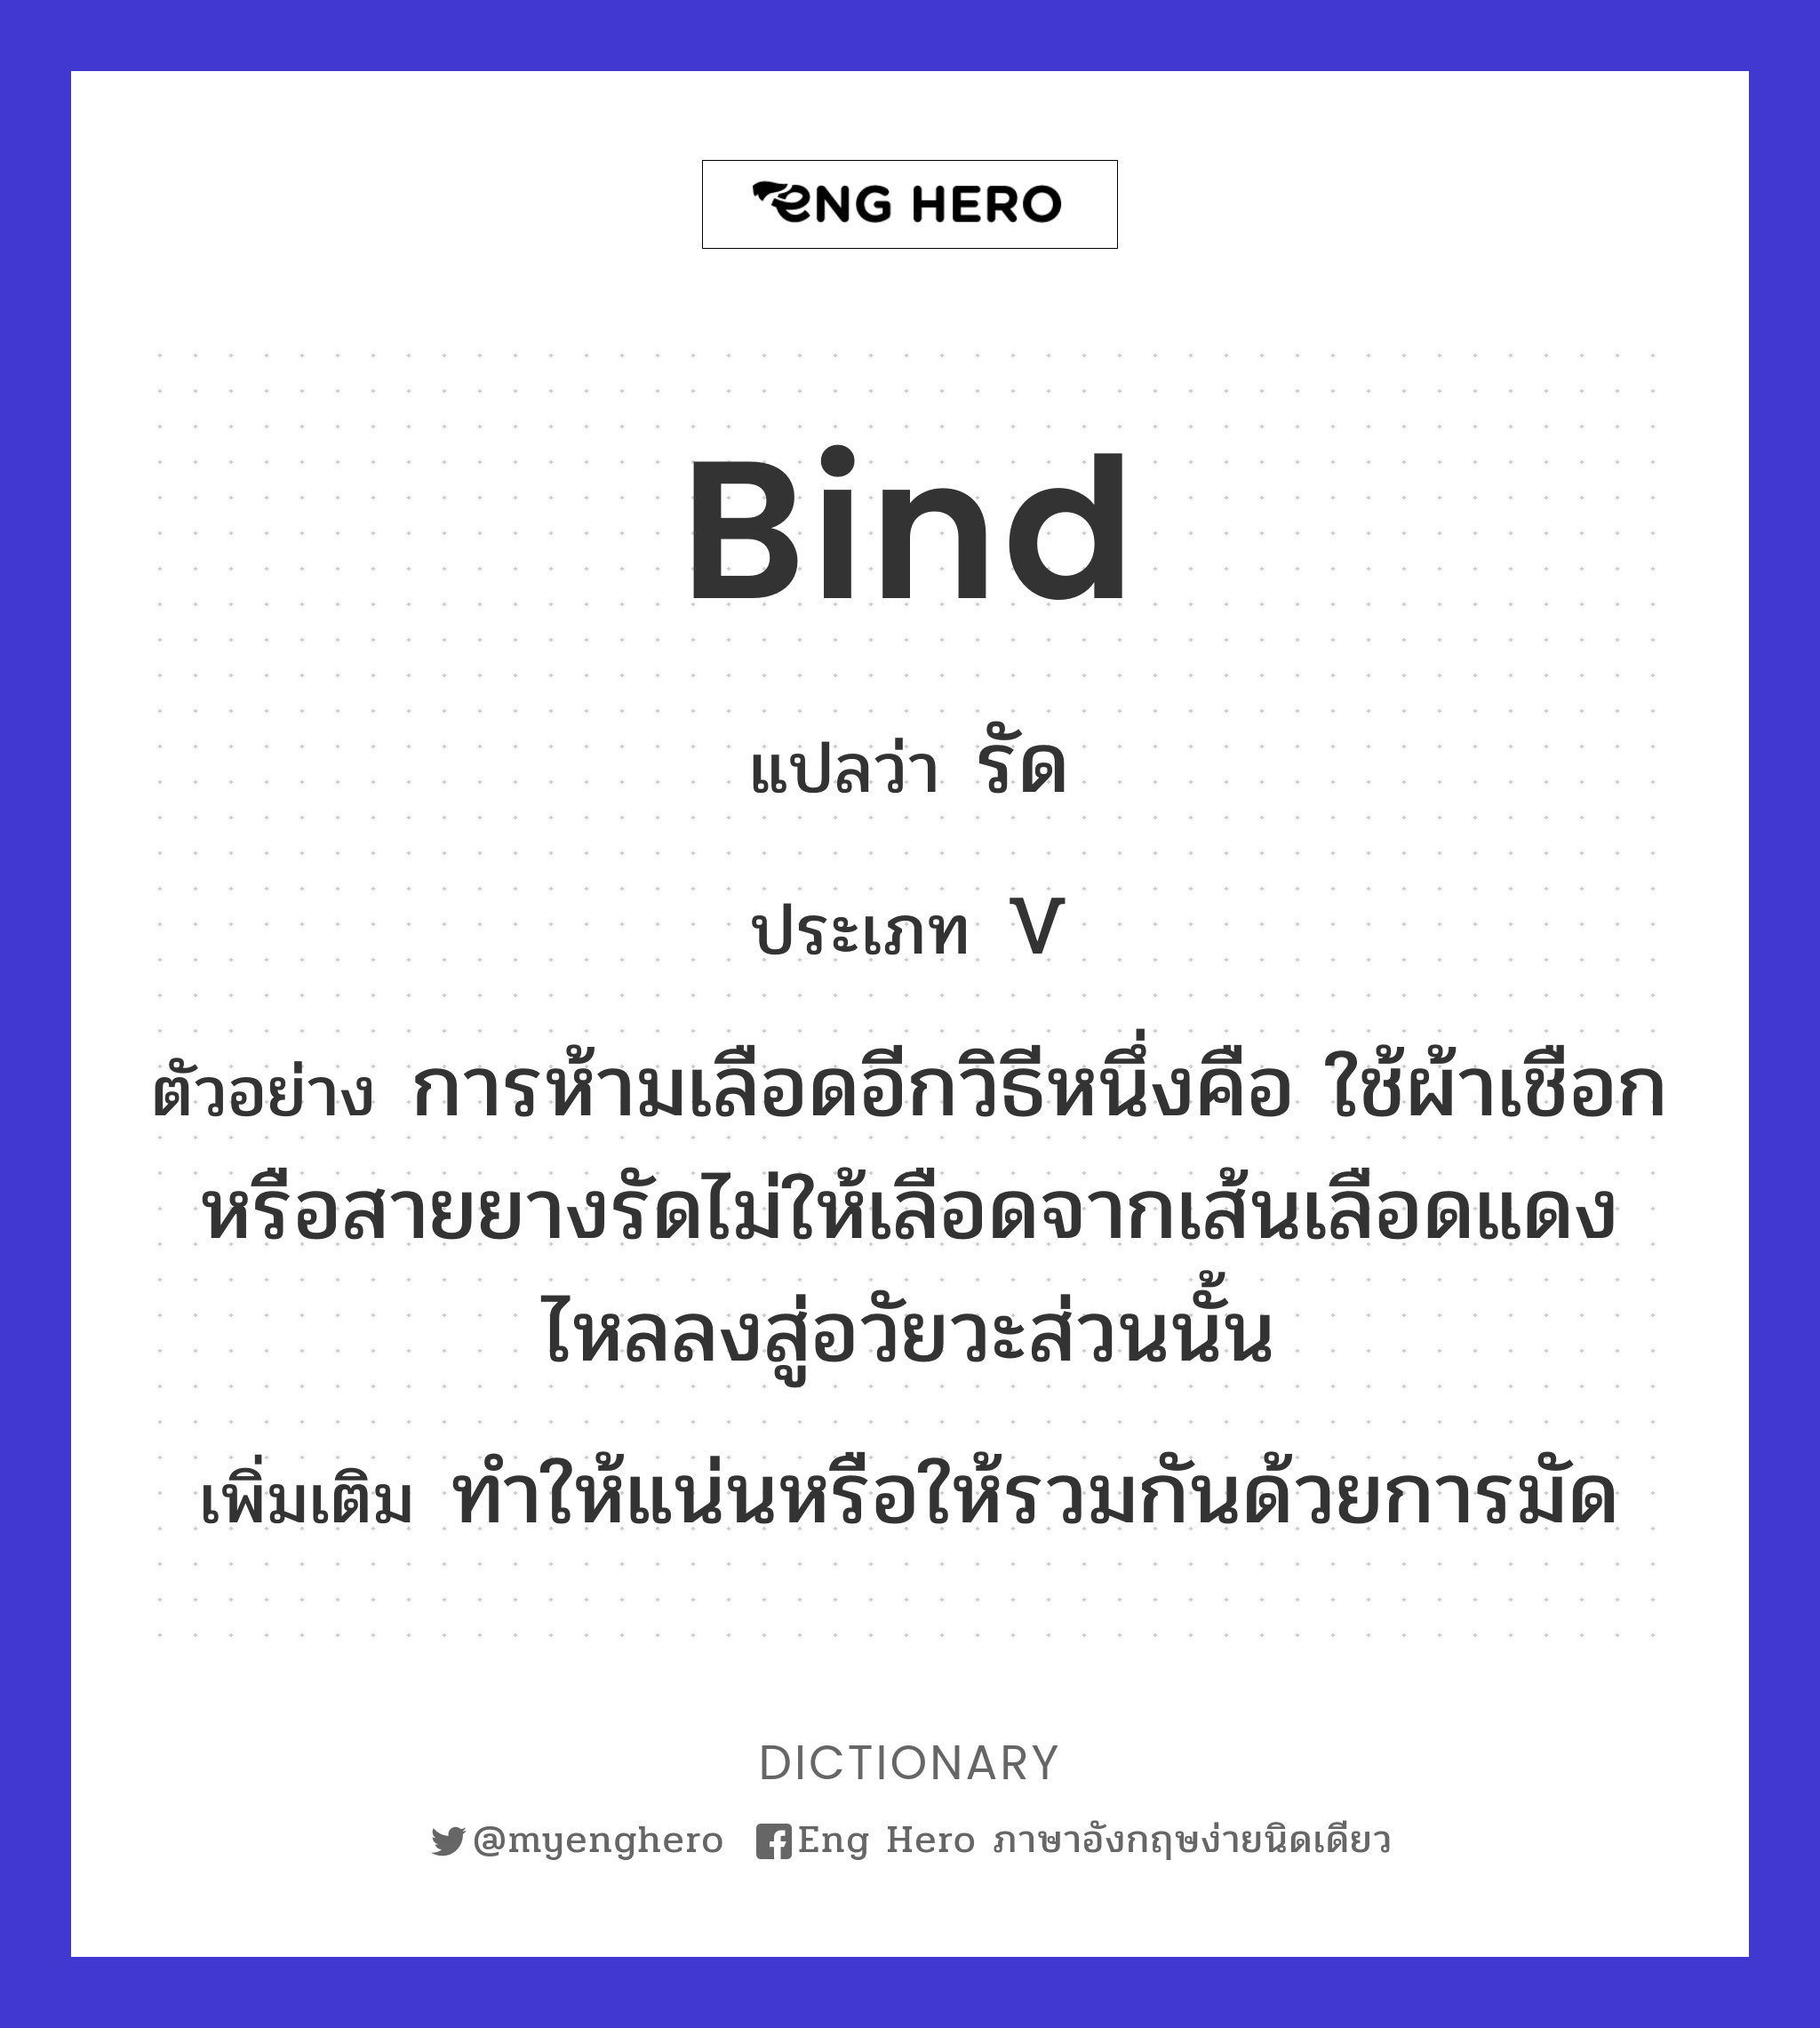 bind